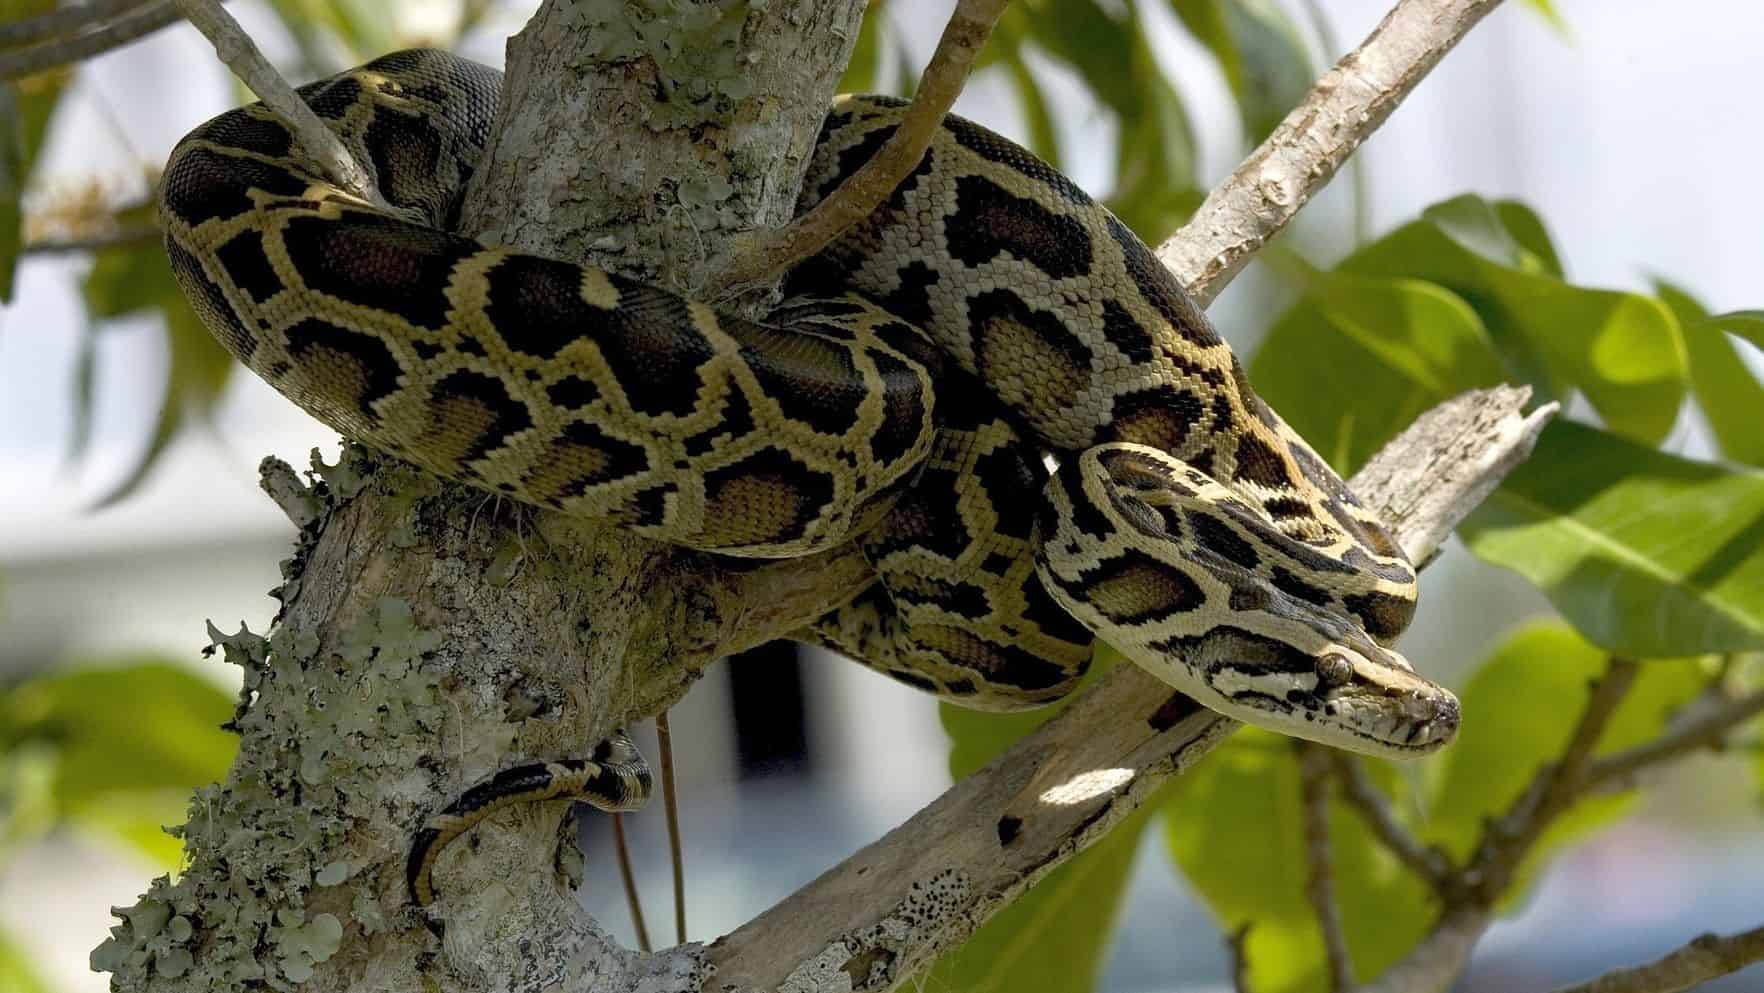 Tree-climbing Burmese python